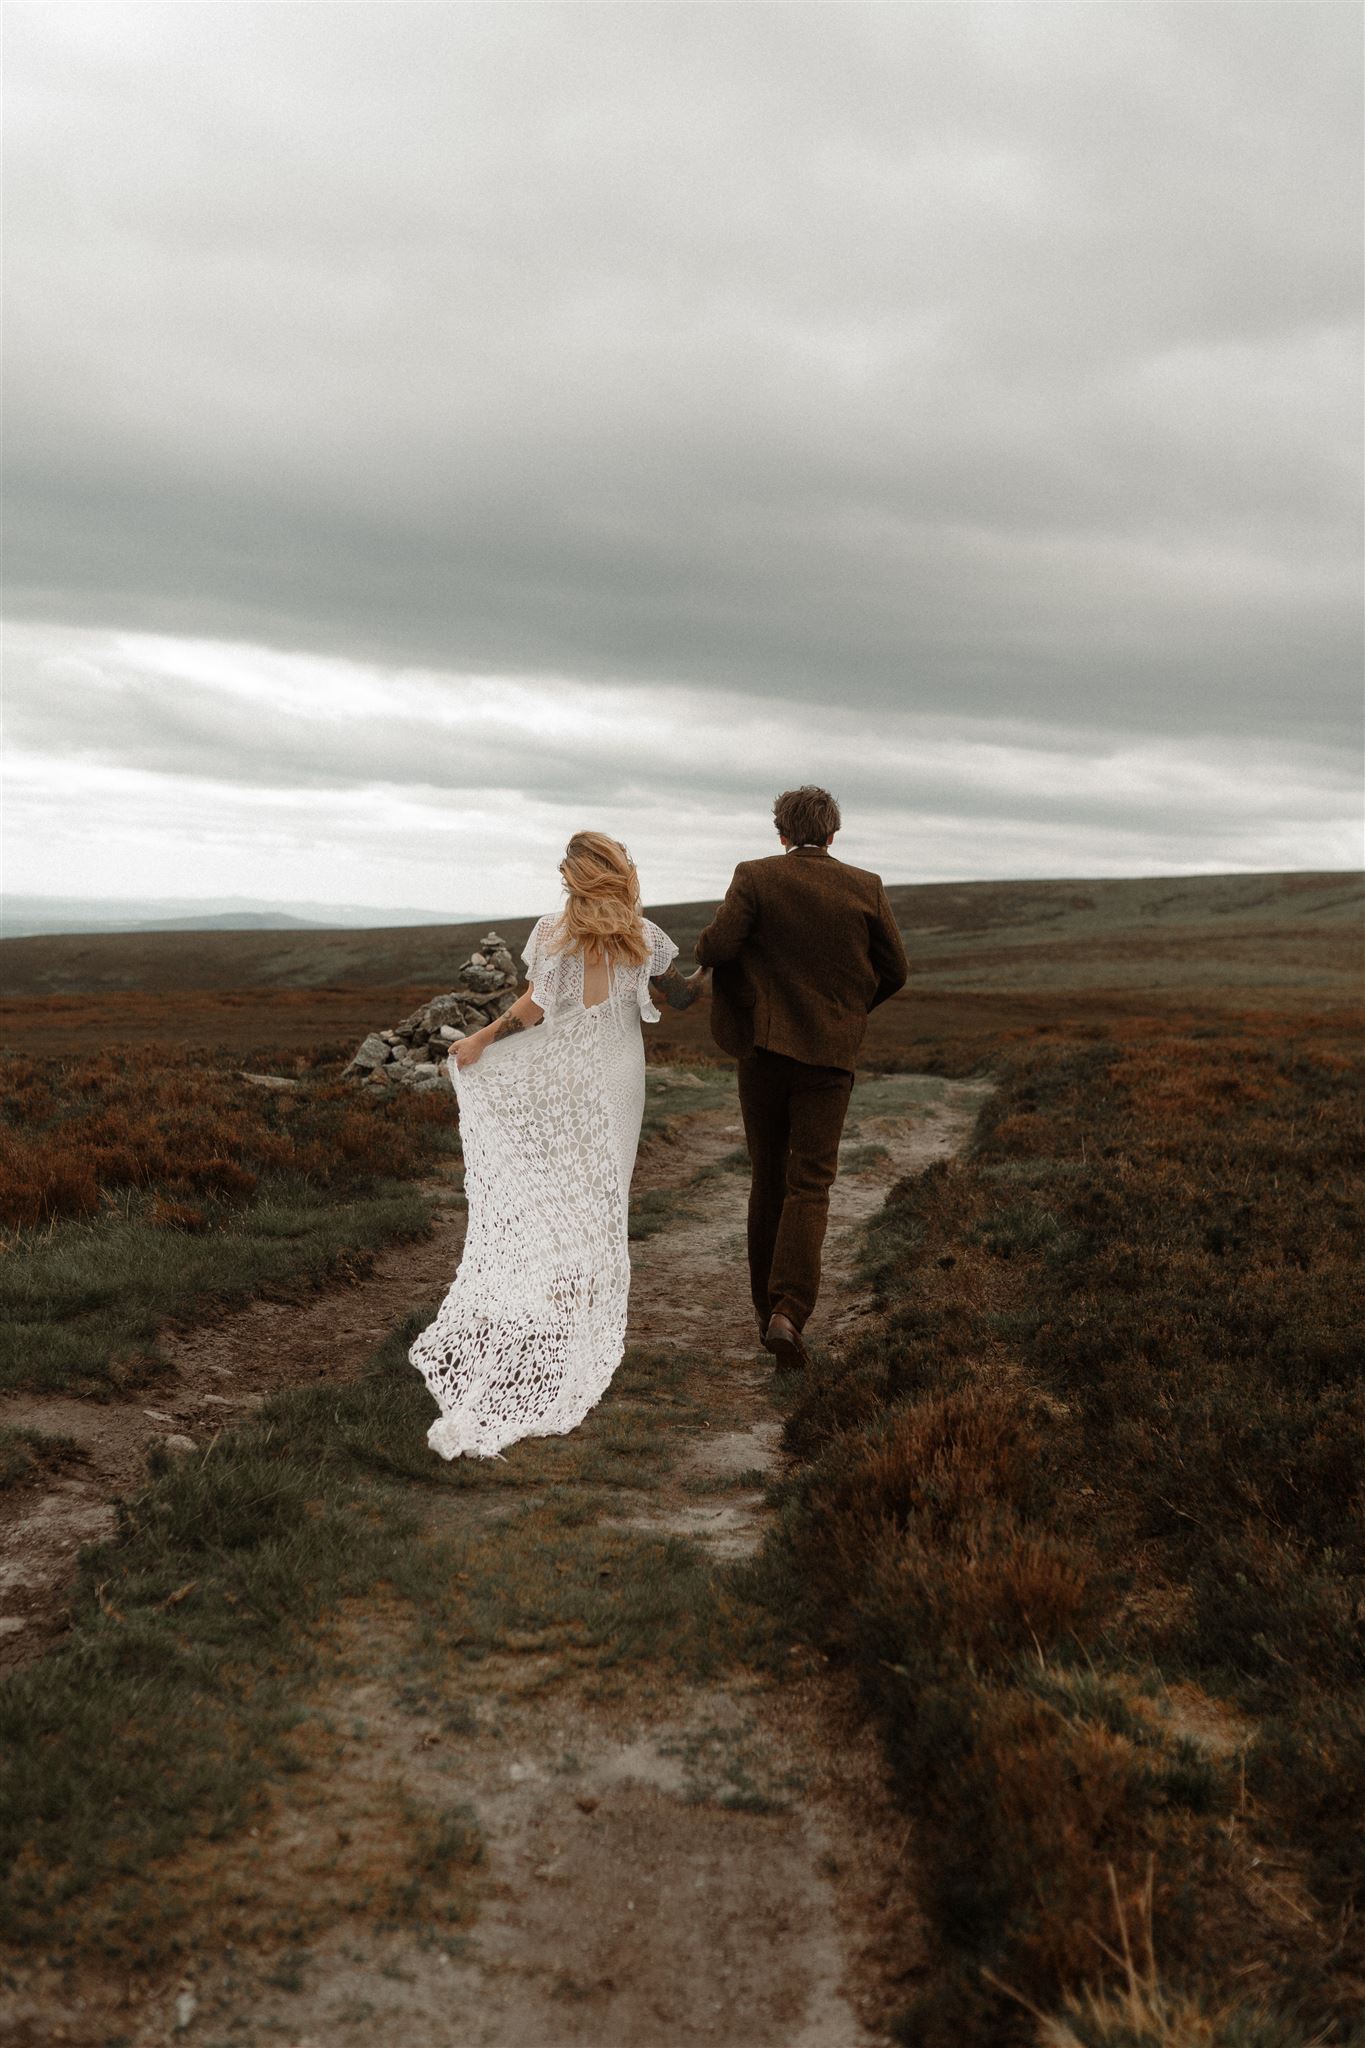 fleetwood mac inspired wedding - free spirited wedding inspiration - scottish highlands wedding - wild wedding photos